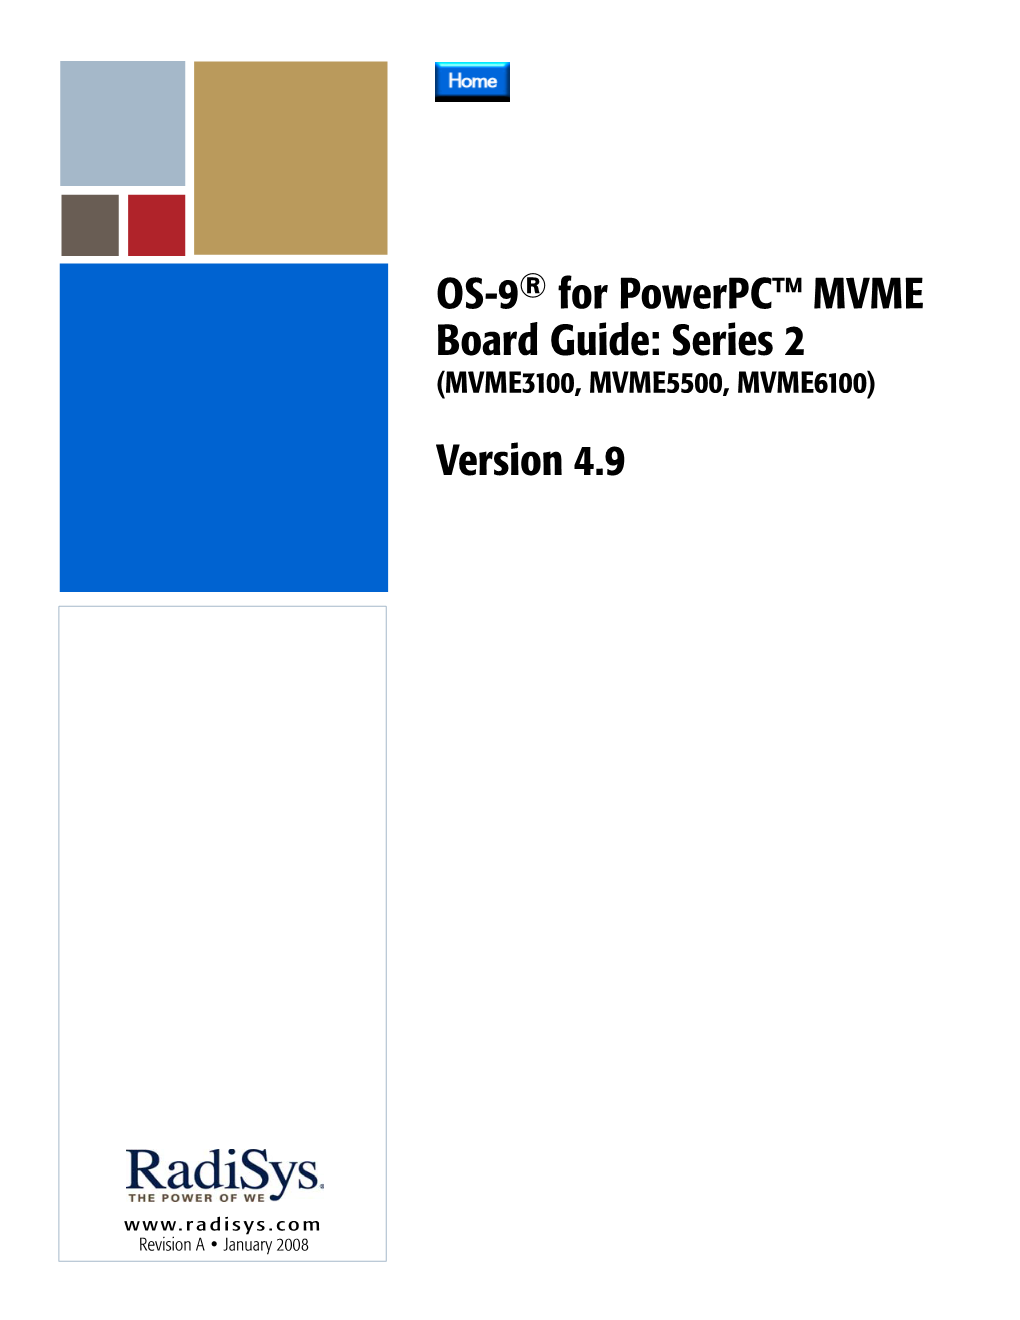 OS-9 for Powerpc MVME Board Guide